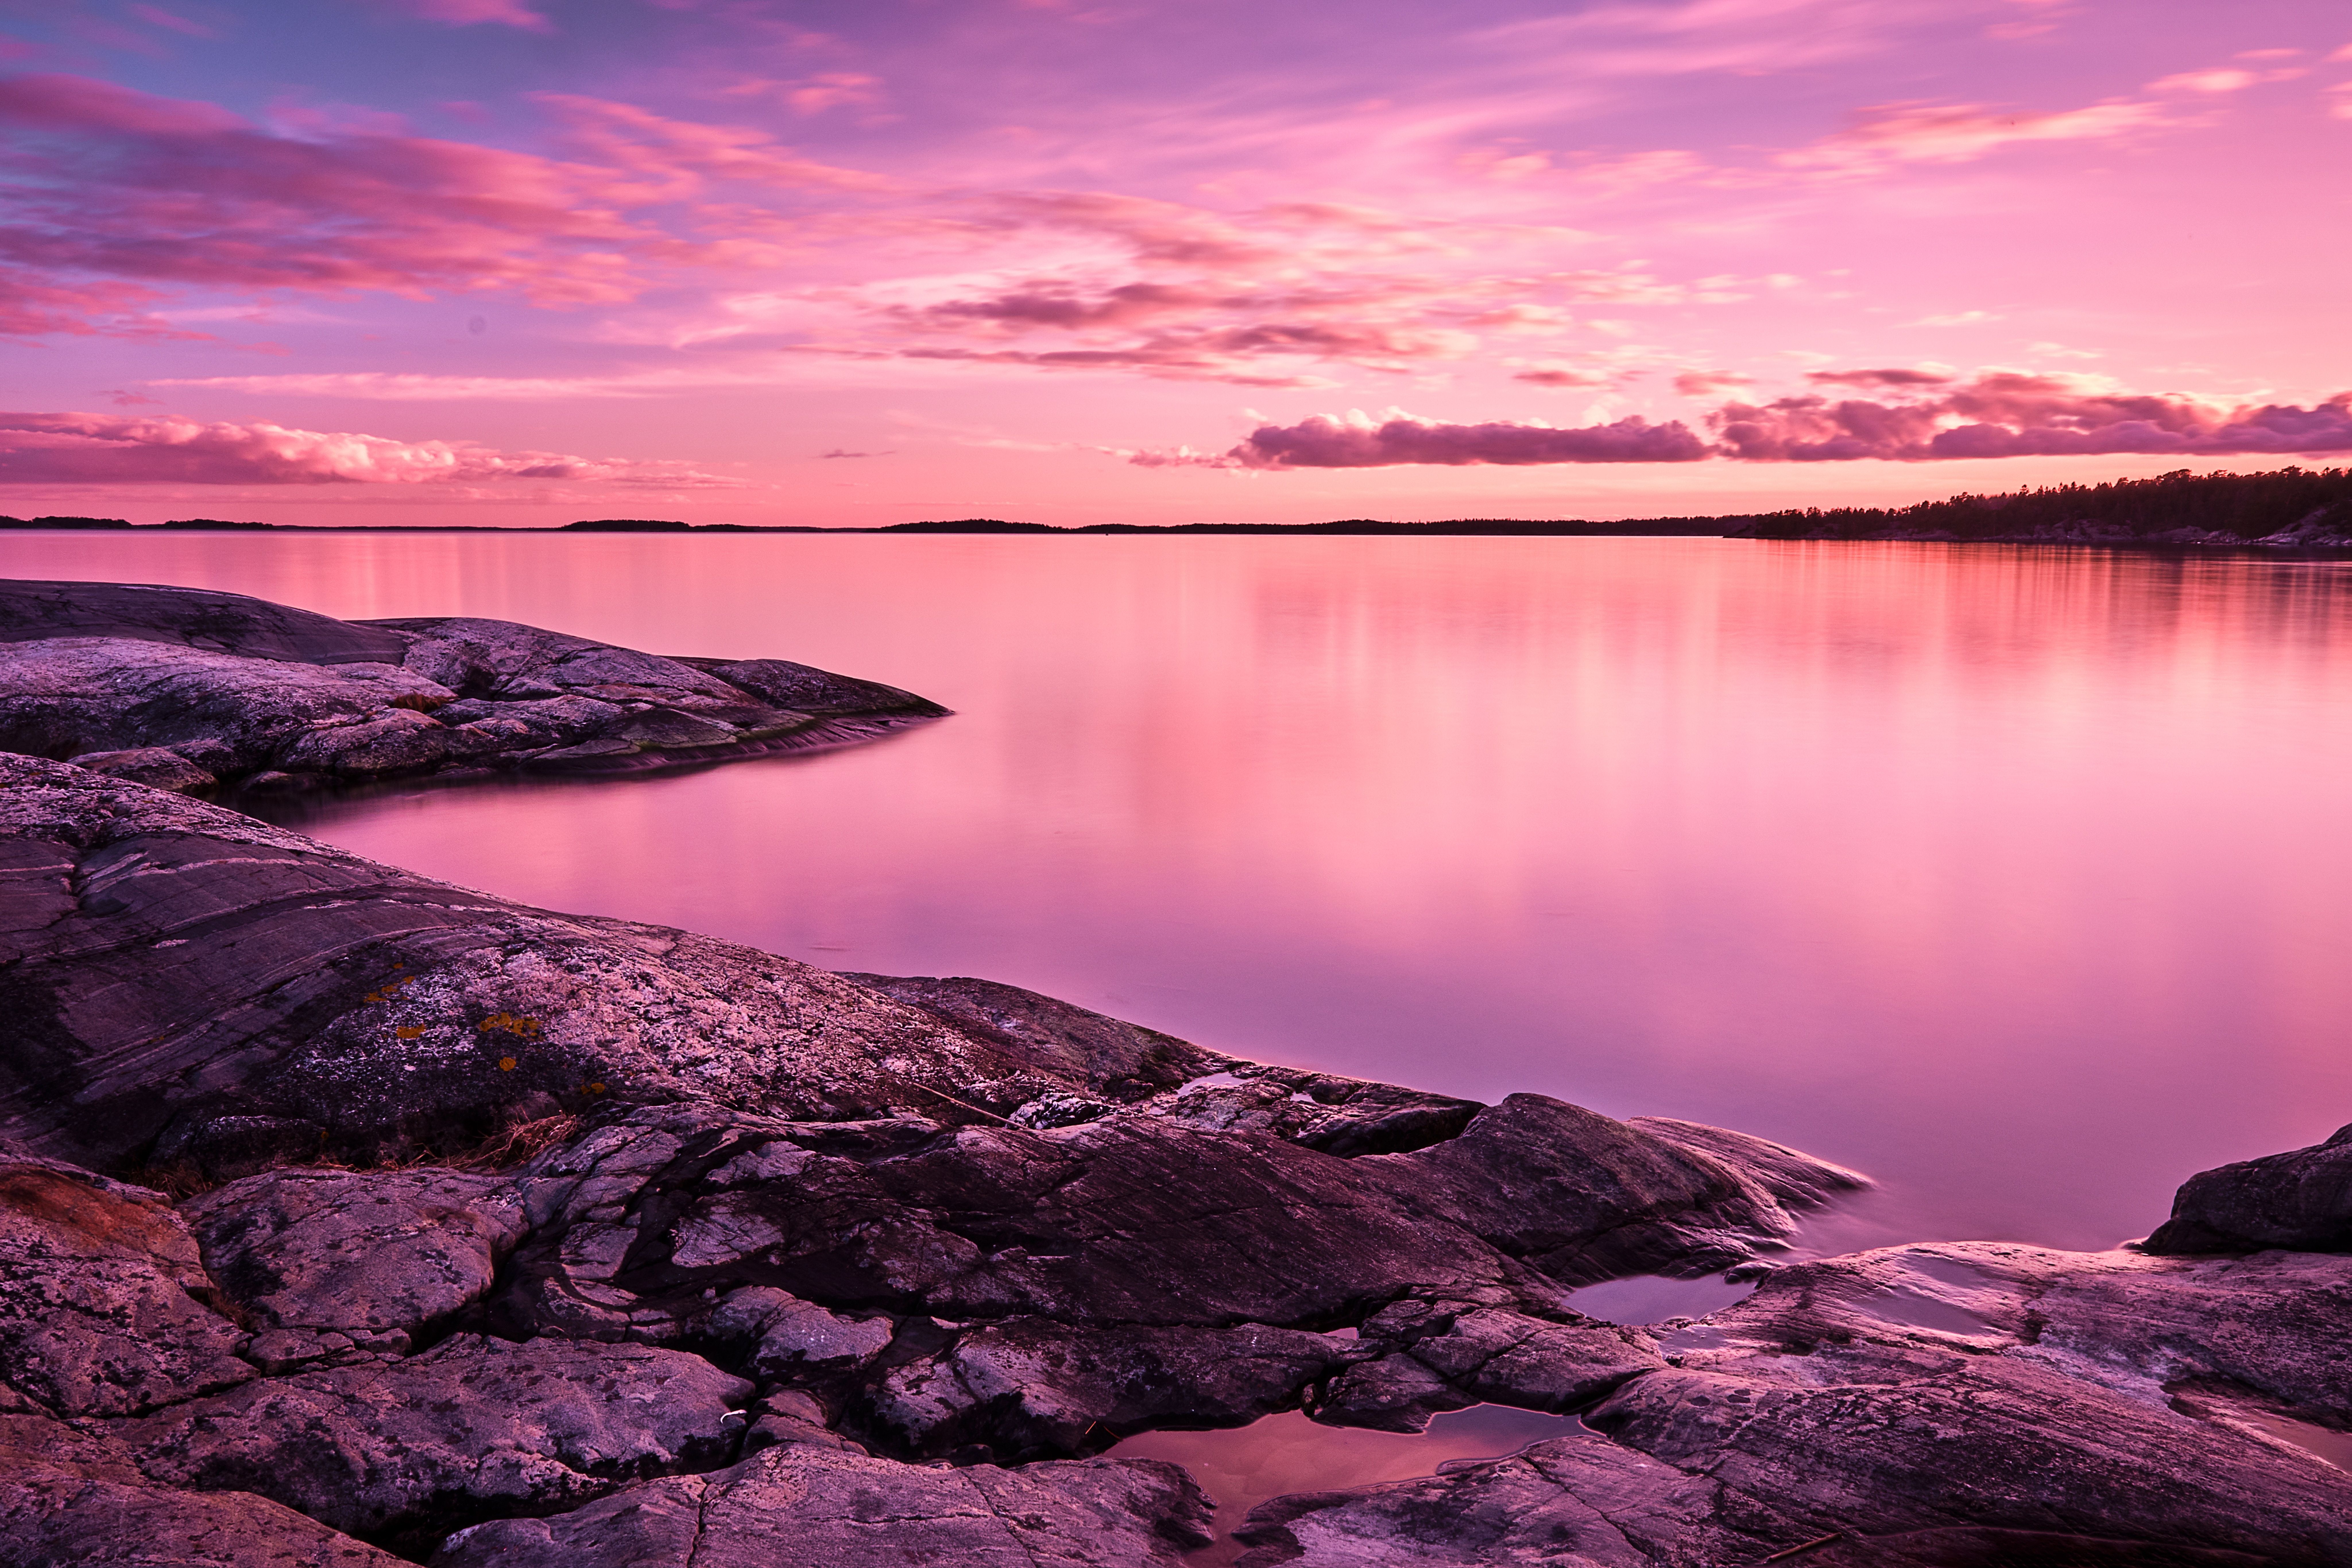 Sunset Wallpaper 4K, Scenery, Lake, Rocks, Pink sky, 8K, Nature